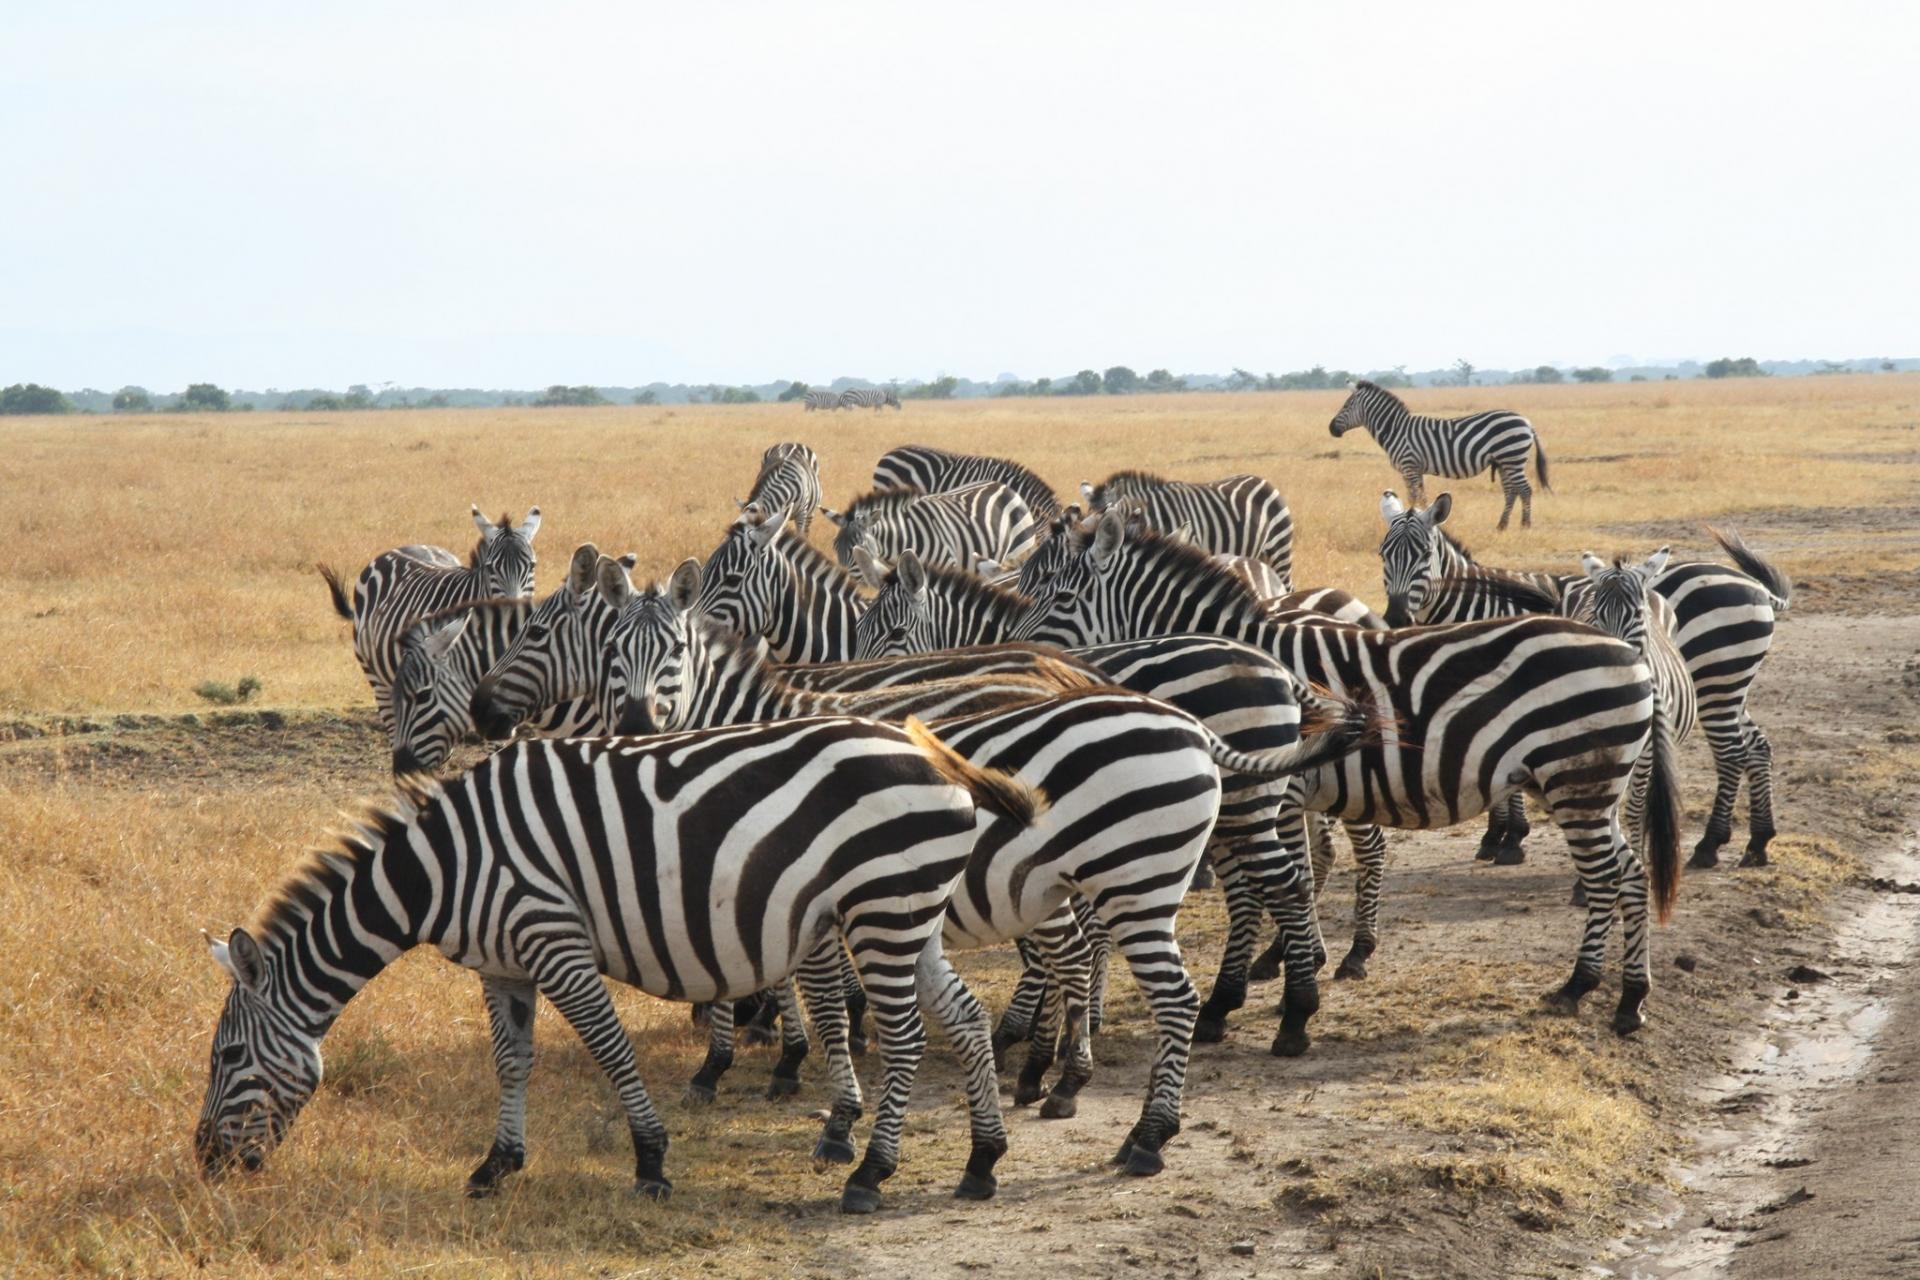 YHA Kenya Travel Tours And Safaris, Wildebeest Migration, Masai Mara,Wildlife Safaris, Holidays, Kenya Adventure Budget Camping Safaris, Best Safaris in Kenya, Safari Booking.